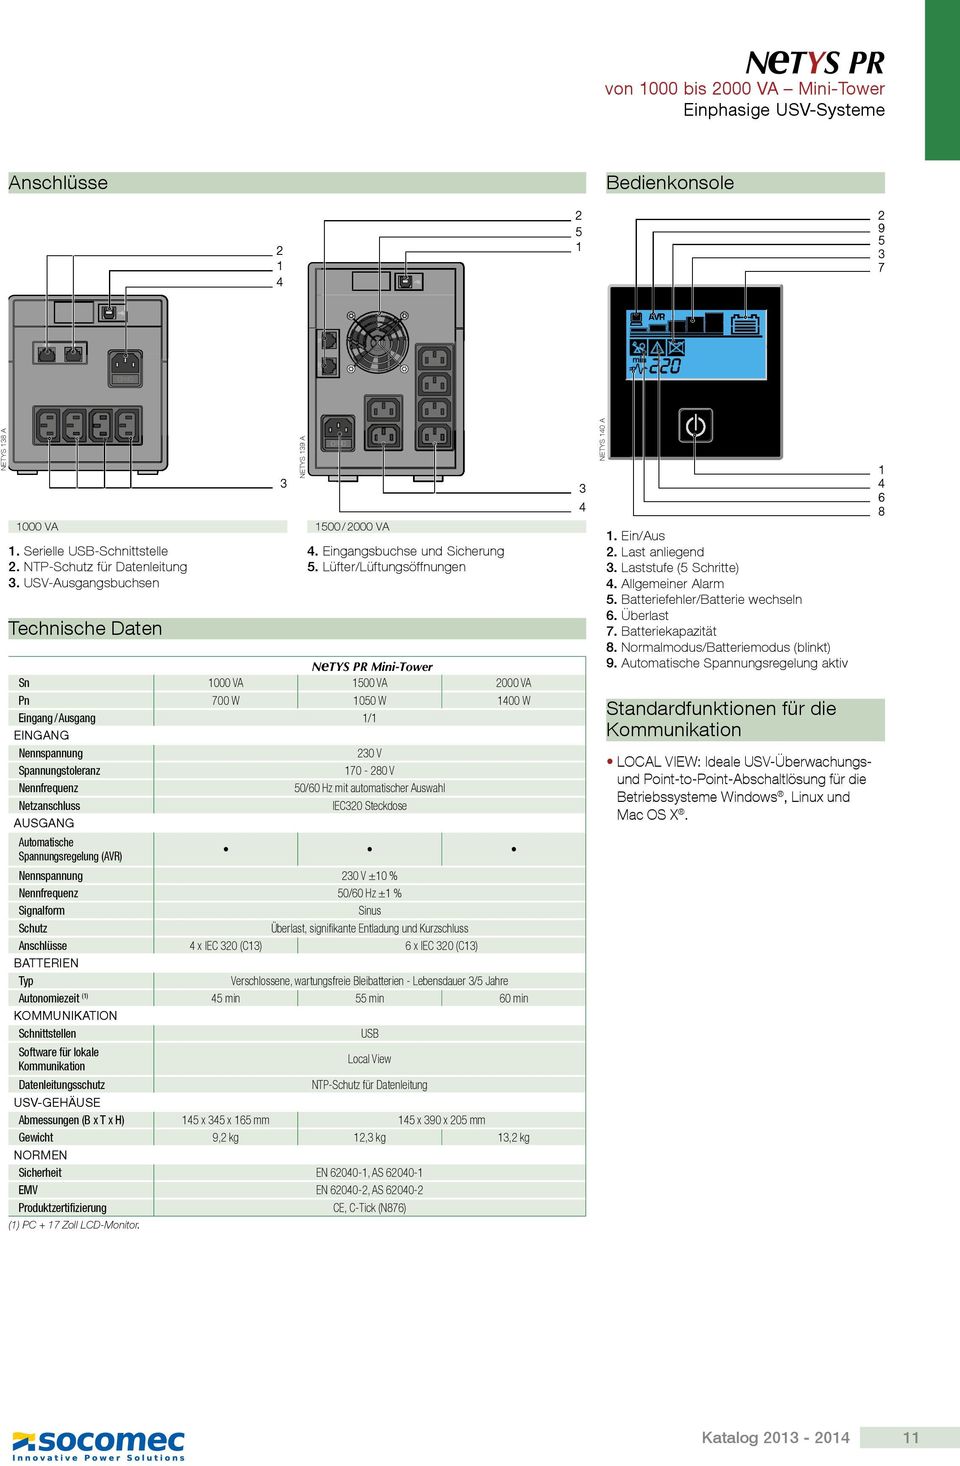 automatischer Auswahl Netzanschluss IEC0 Steckdose AUSGANG Automatische Spannungsregelung (AVR) Nennspannung 0 V ±0 % Nennfrequenz 0/0 Hz ± % Signalform Sinus Schutz Überlast, signifikante Entladung